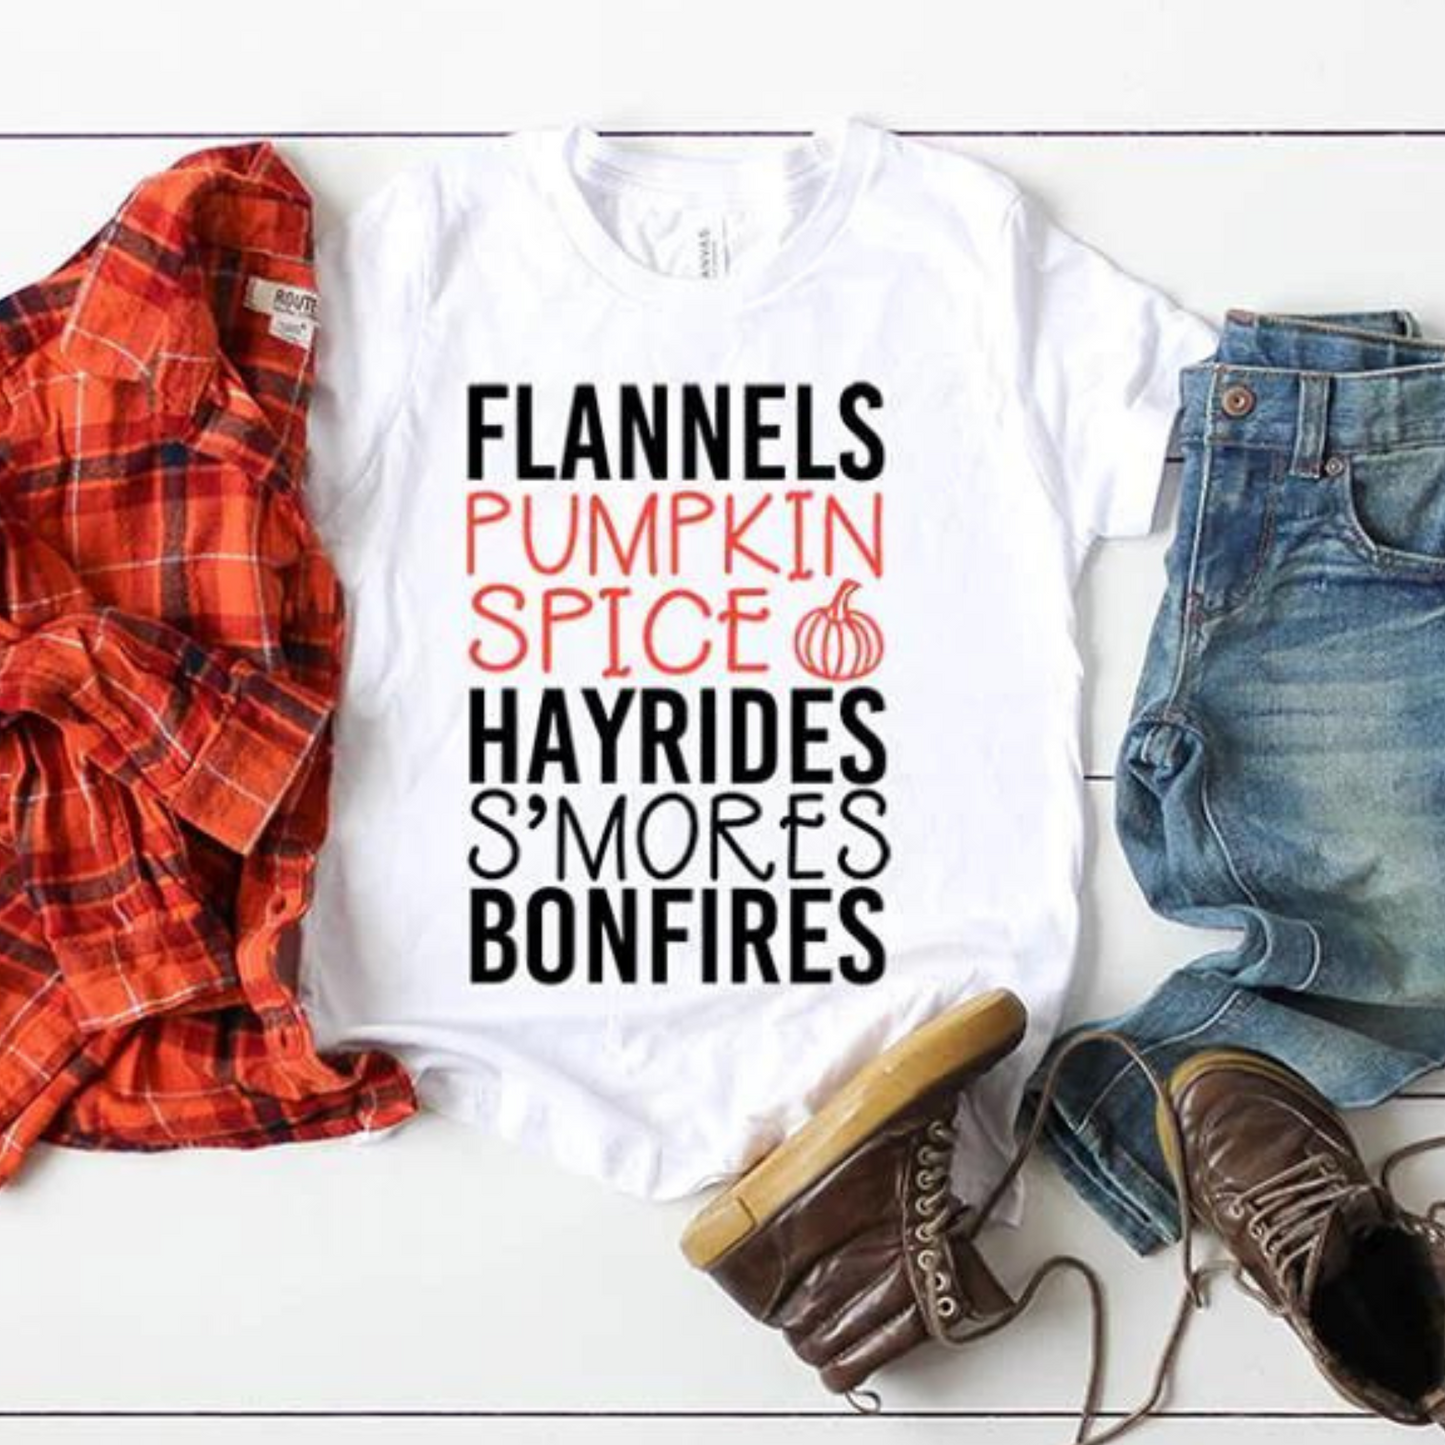 Flannels Pumpkin Spice Hayrides Bonfires S'mores Graphic Tee, White